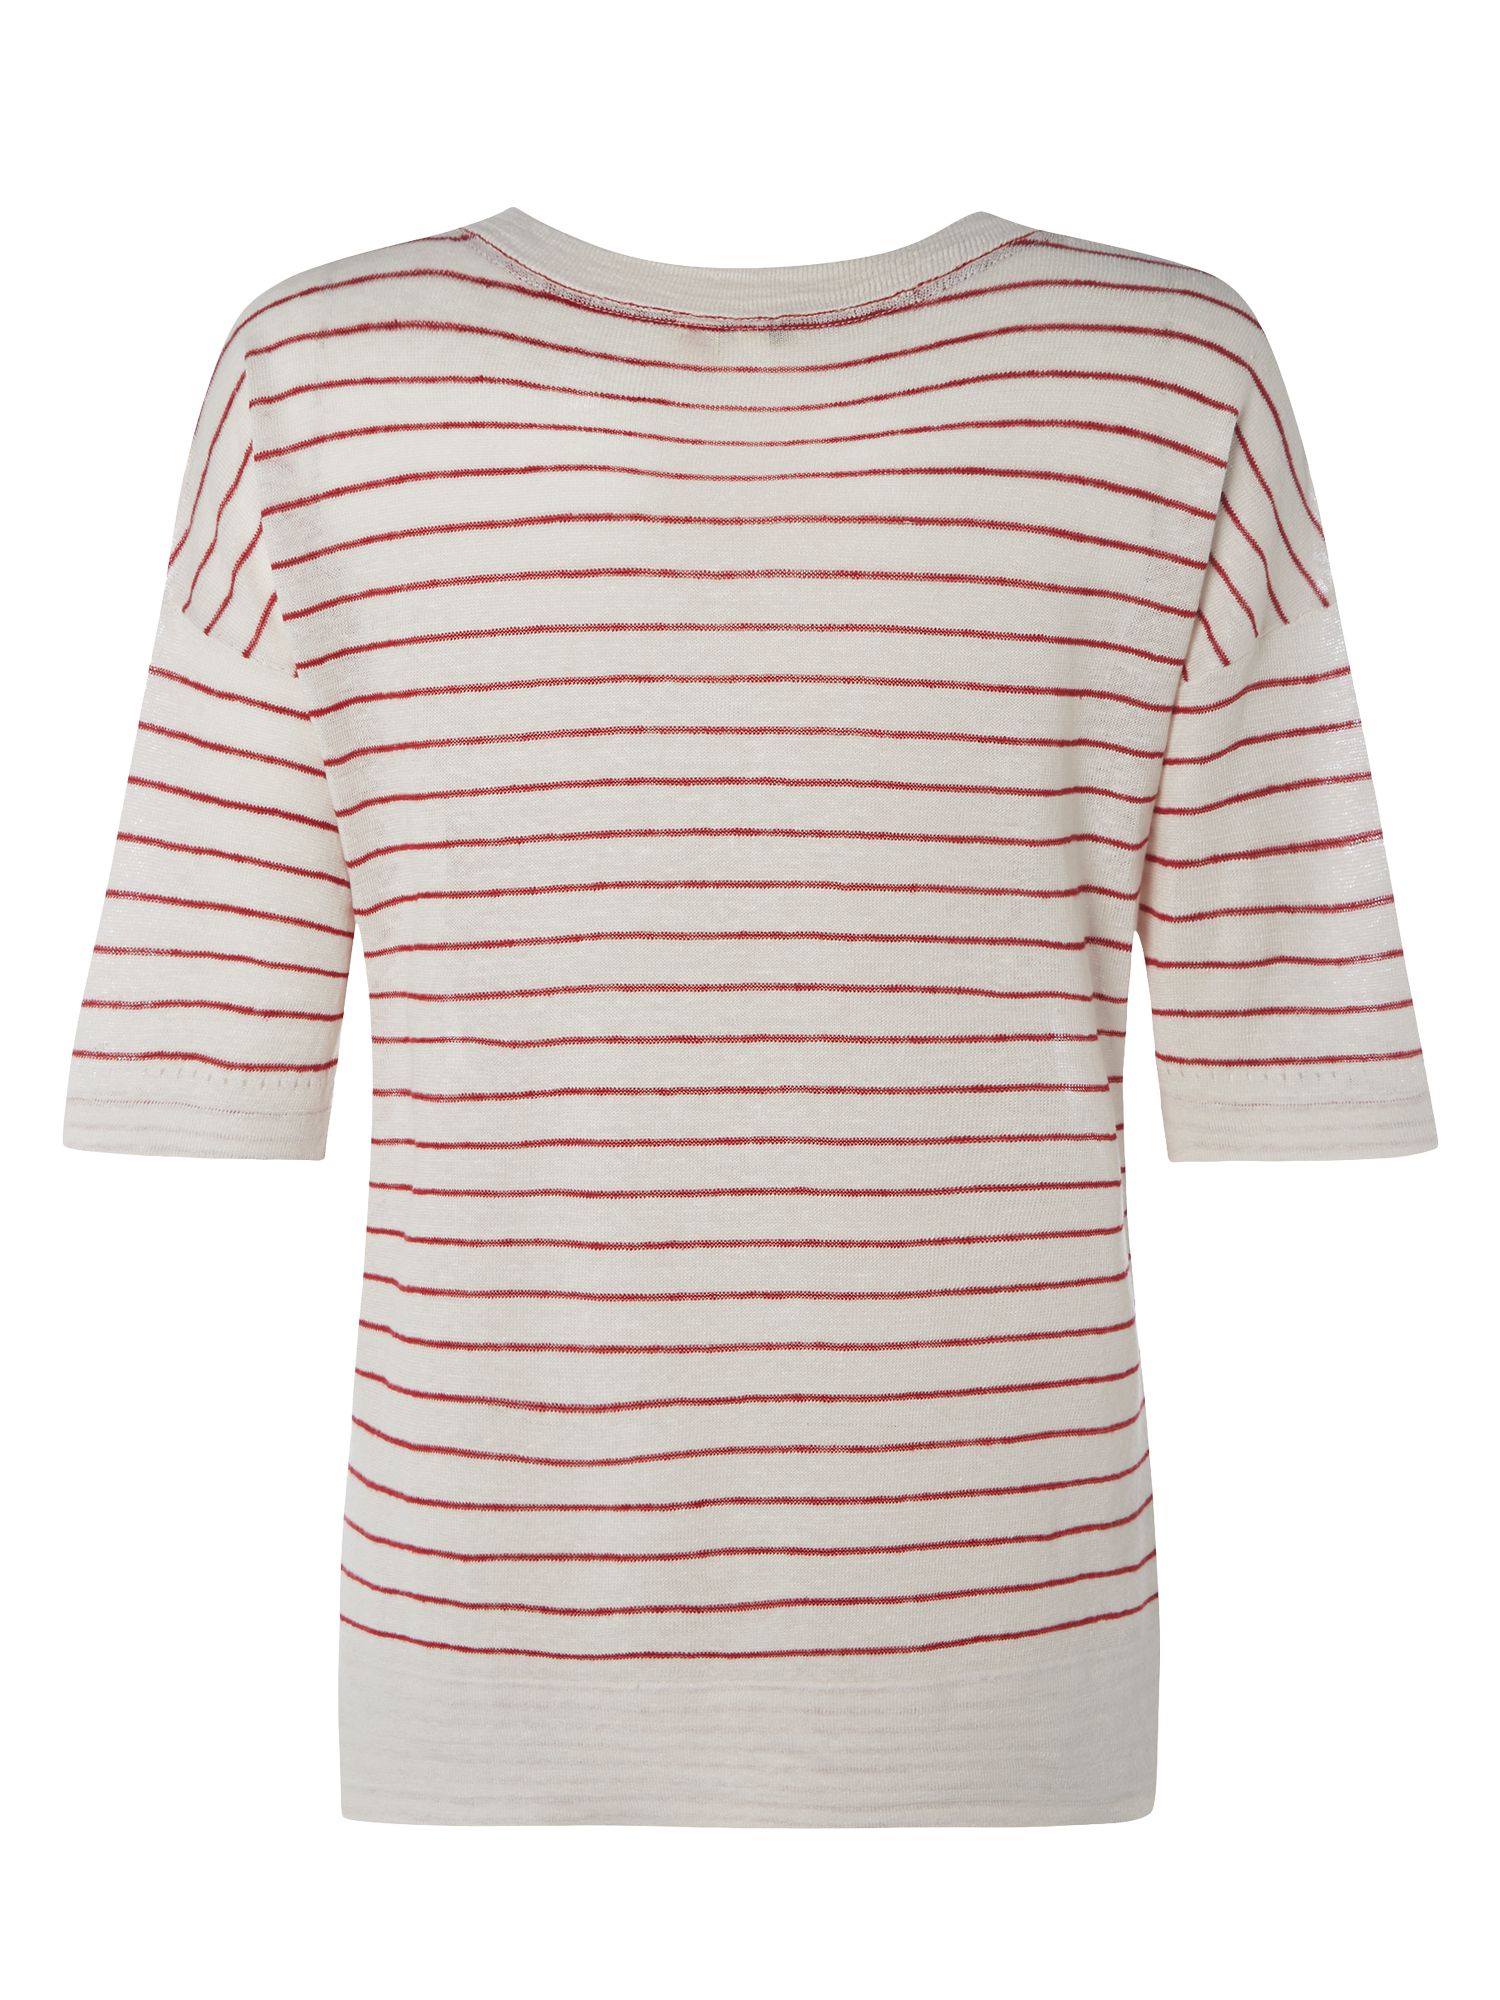 White Stuff Island Striped Linen V-Neck Knit Top, Red Stripe